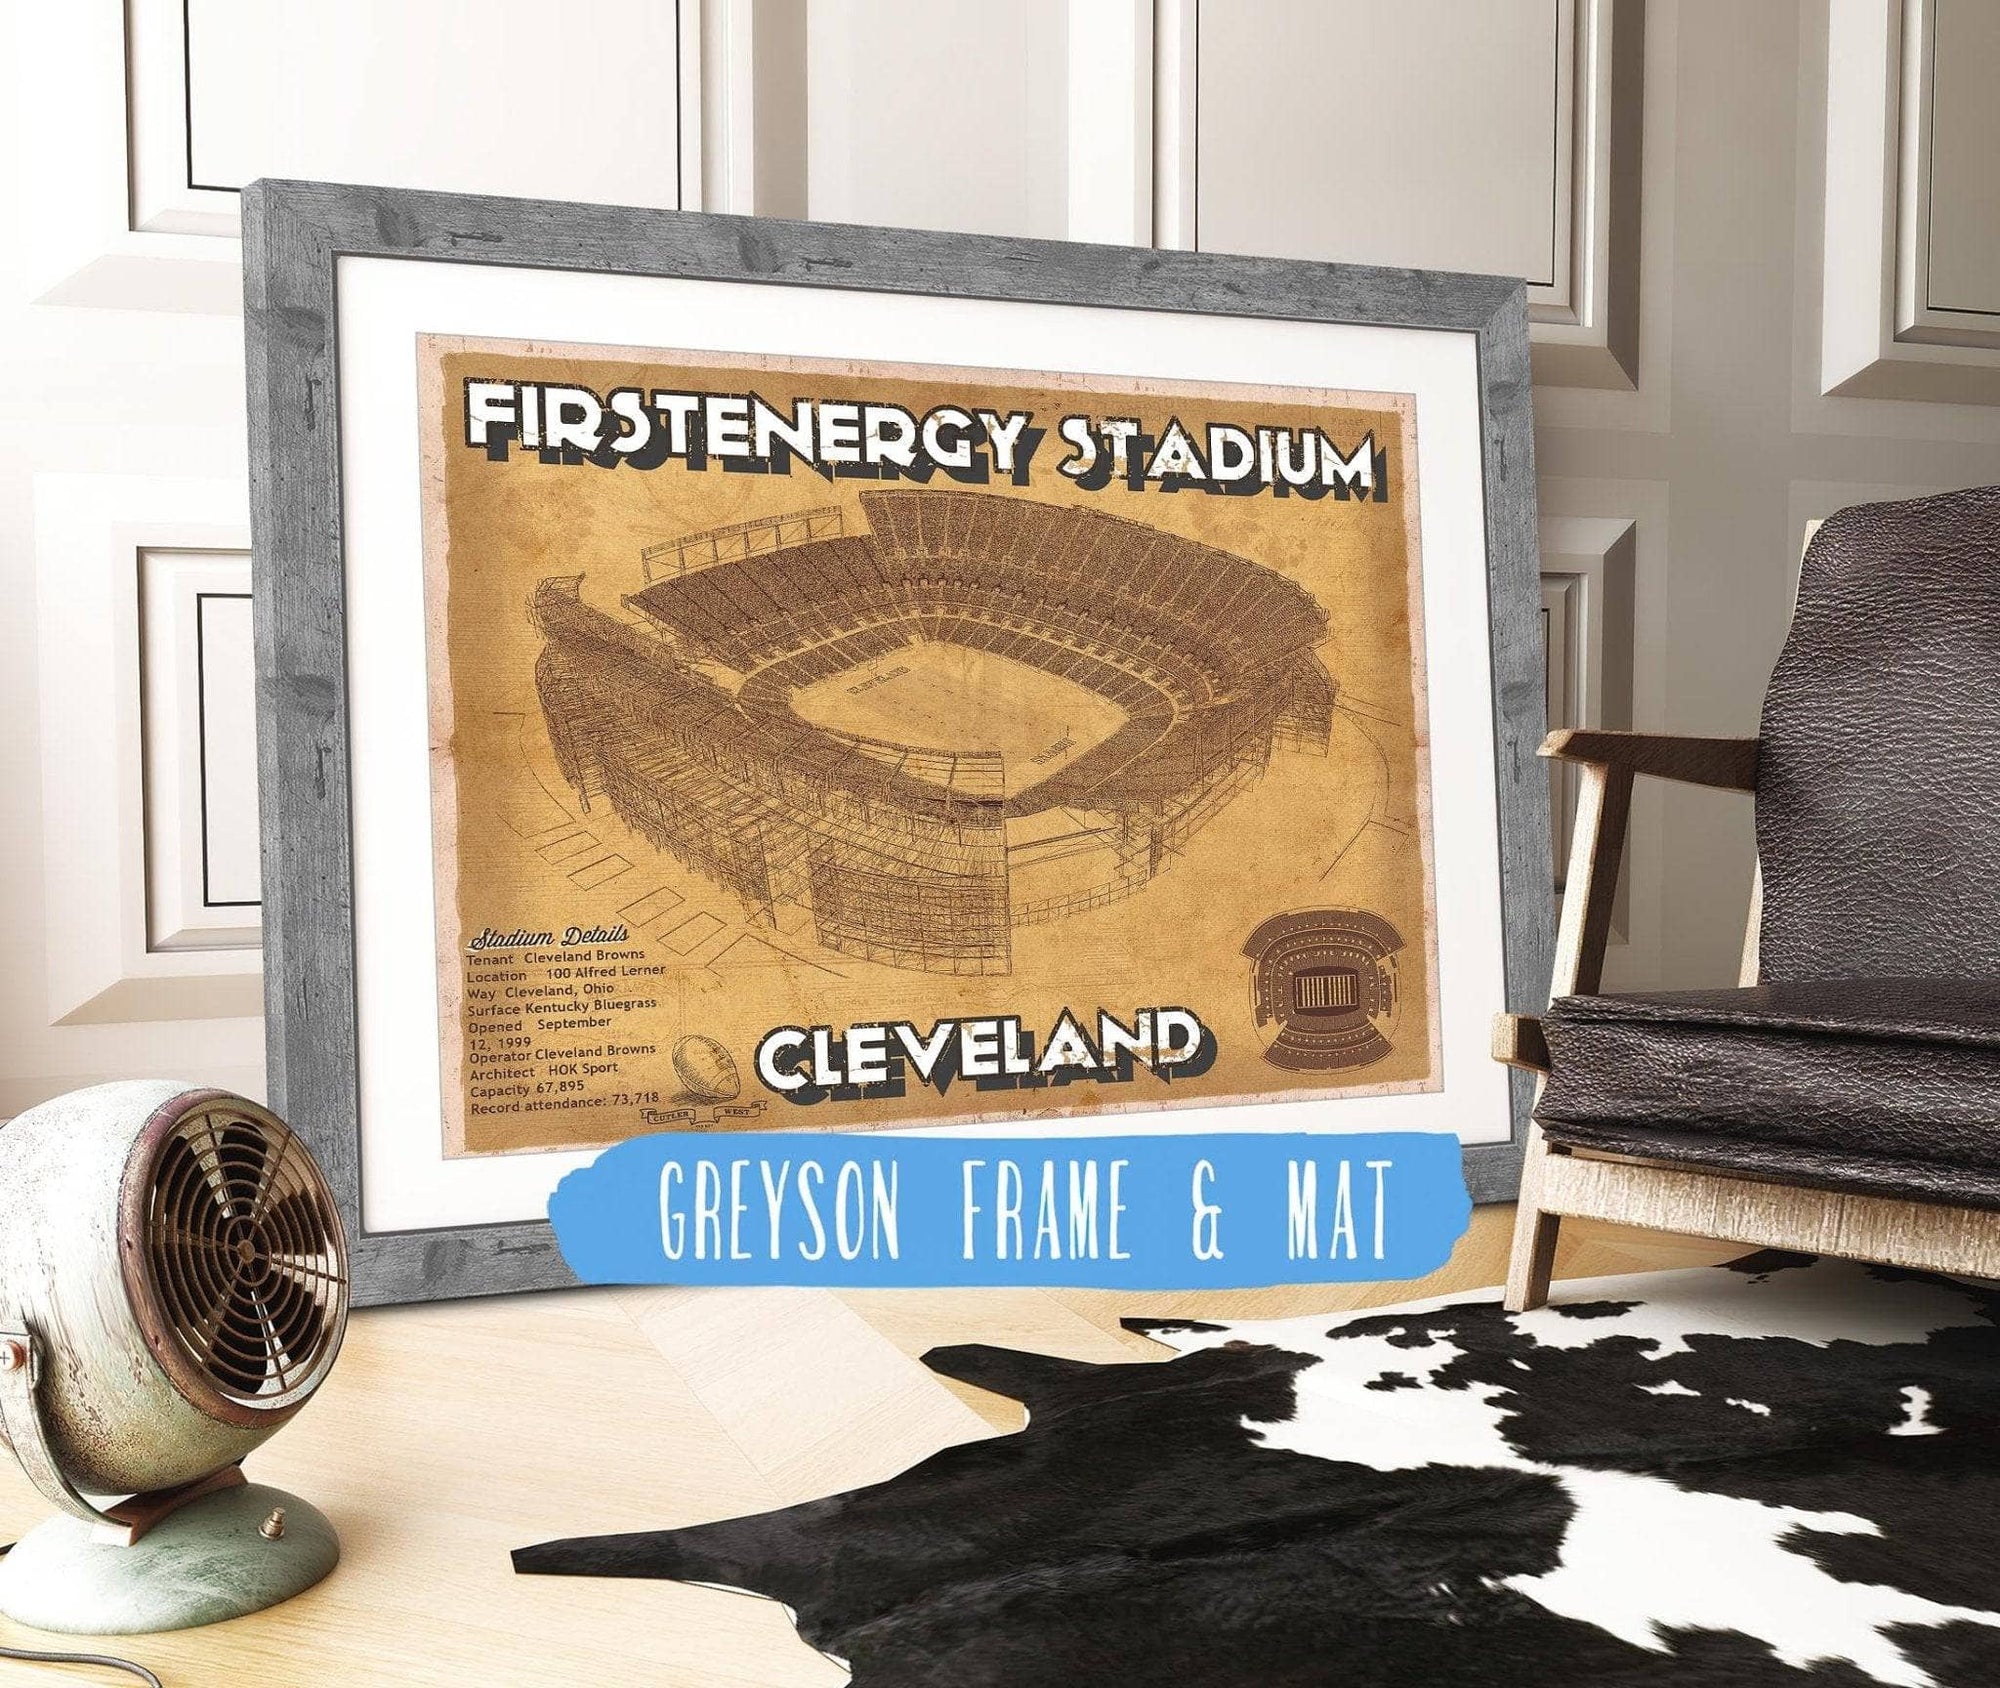 Cutler West Pro Football Collection 14" x 11" / Greyson Frame & Mat Cleveland Browns FirstEnergy Stadium - Vintage Football Print 698892938_60229